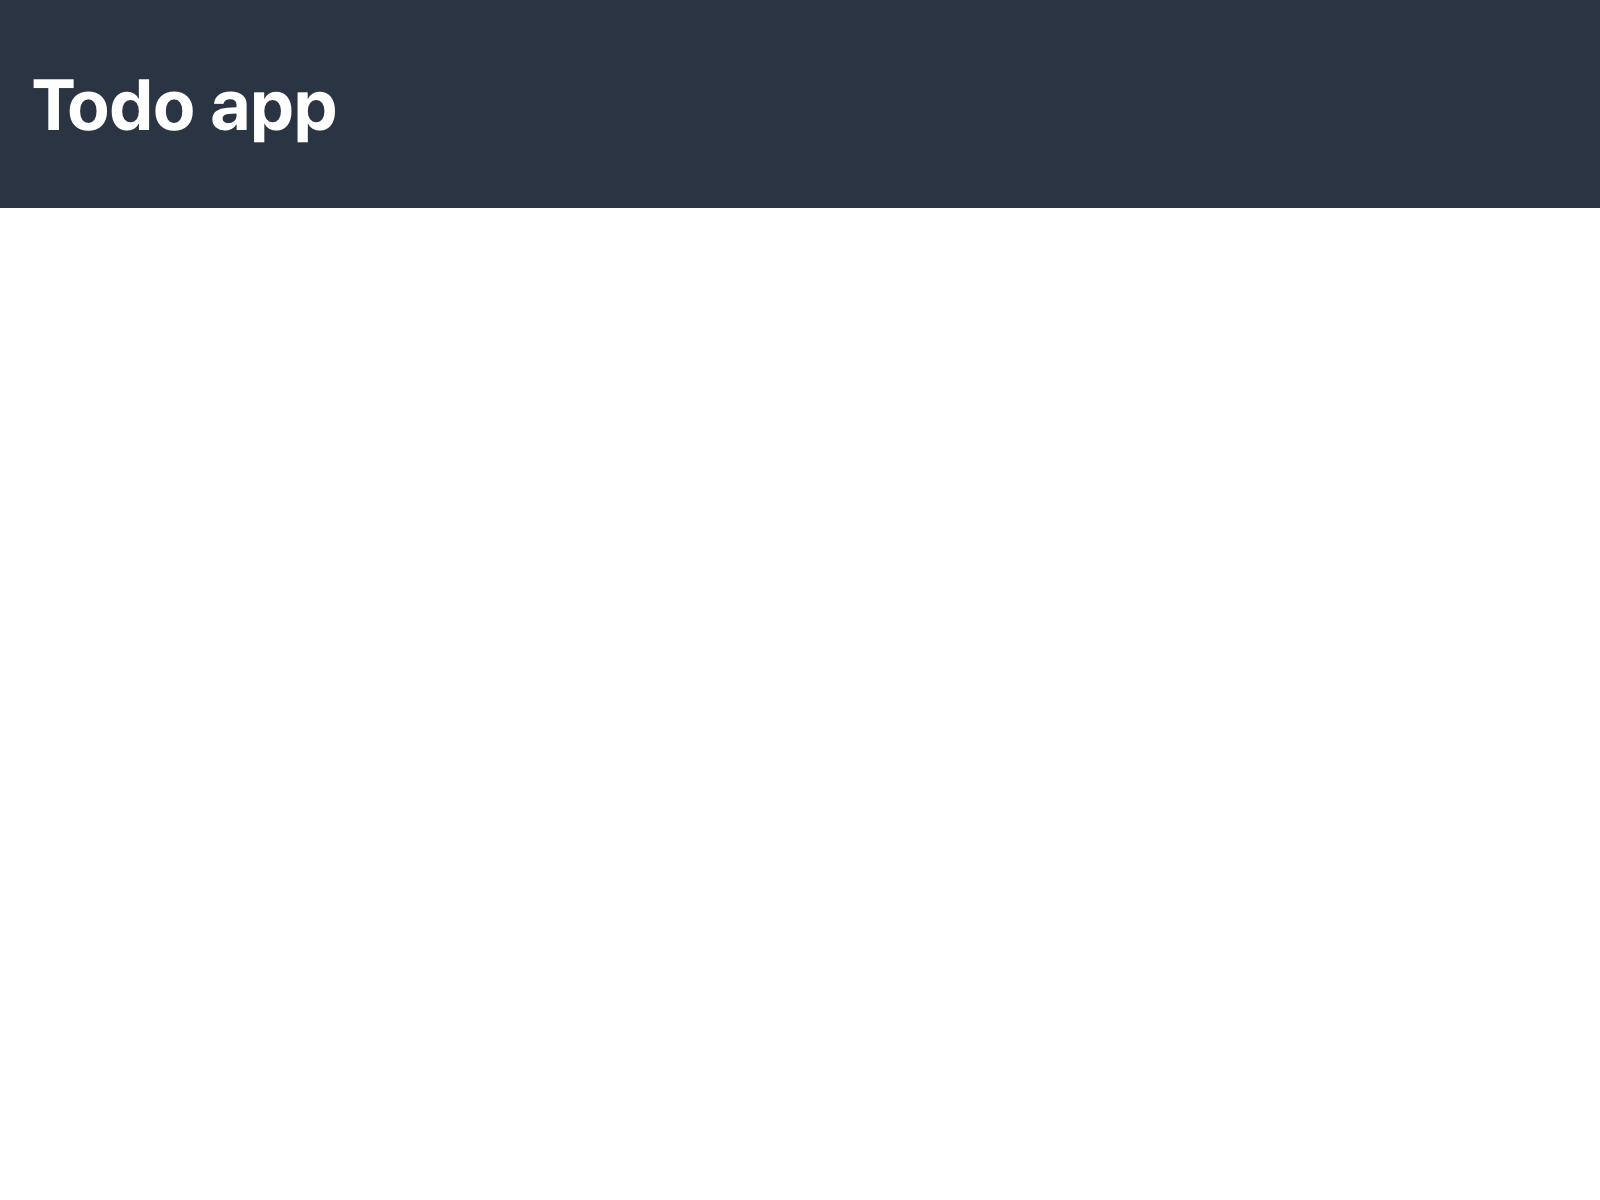 Empty starter app running on localhost